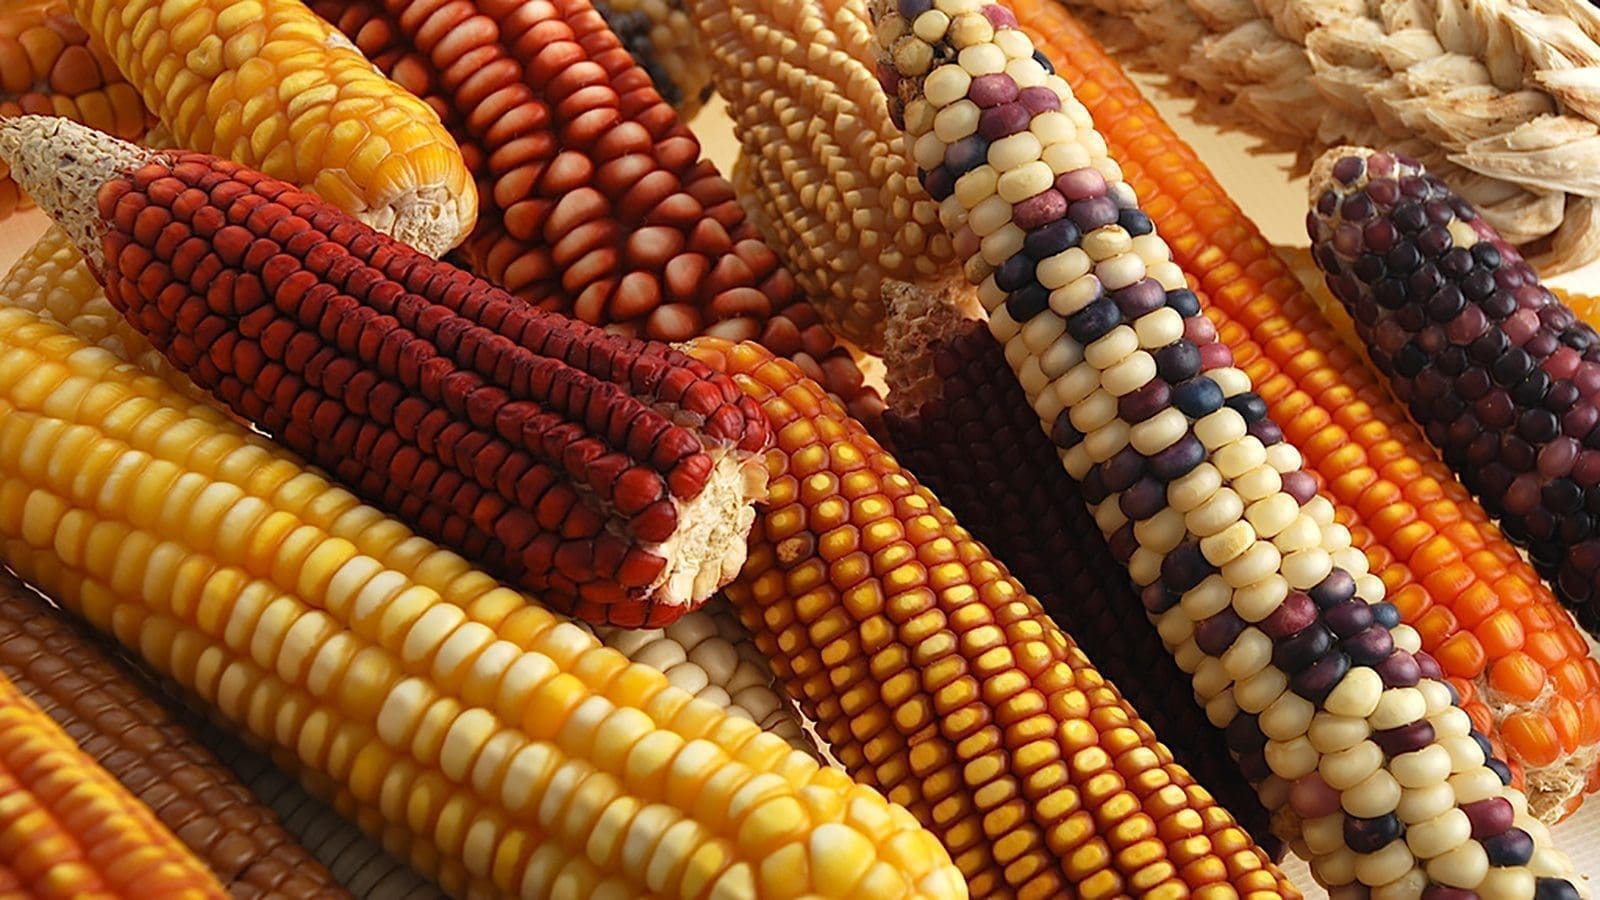 Scientists disagree on GMO Bill